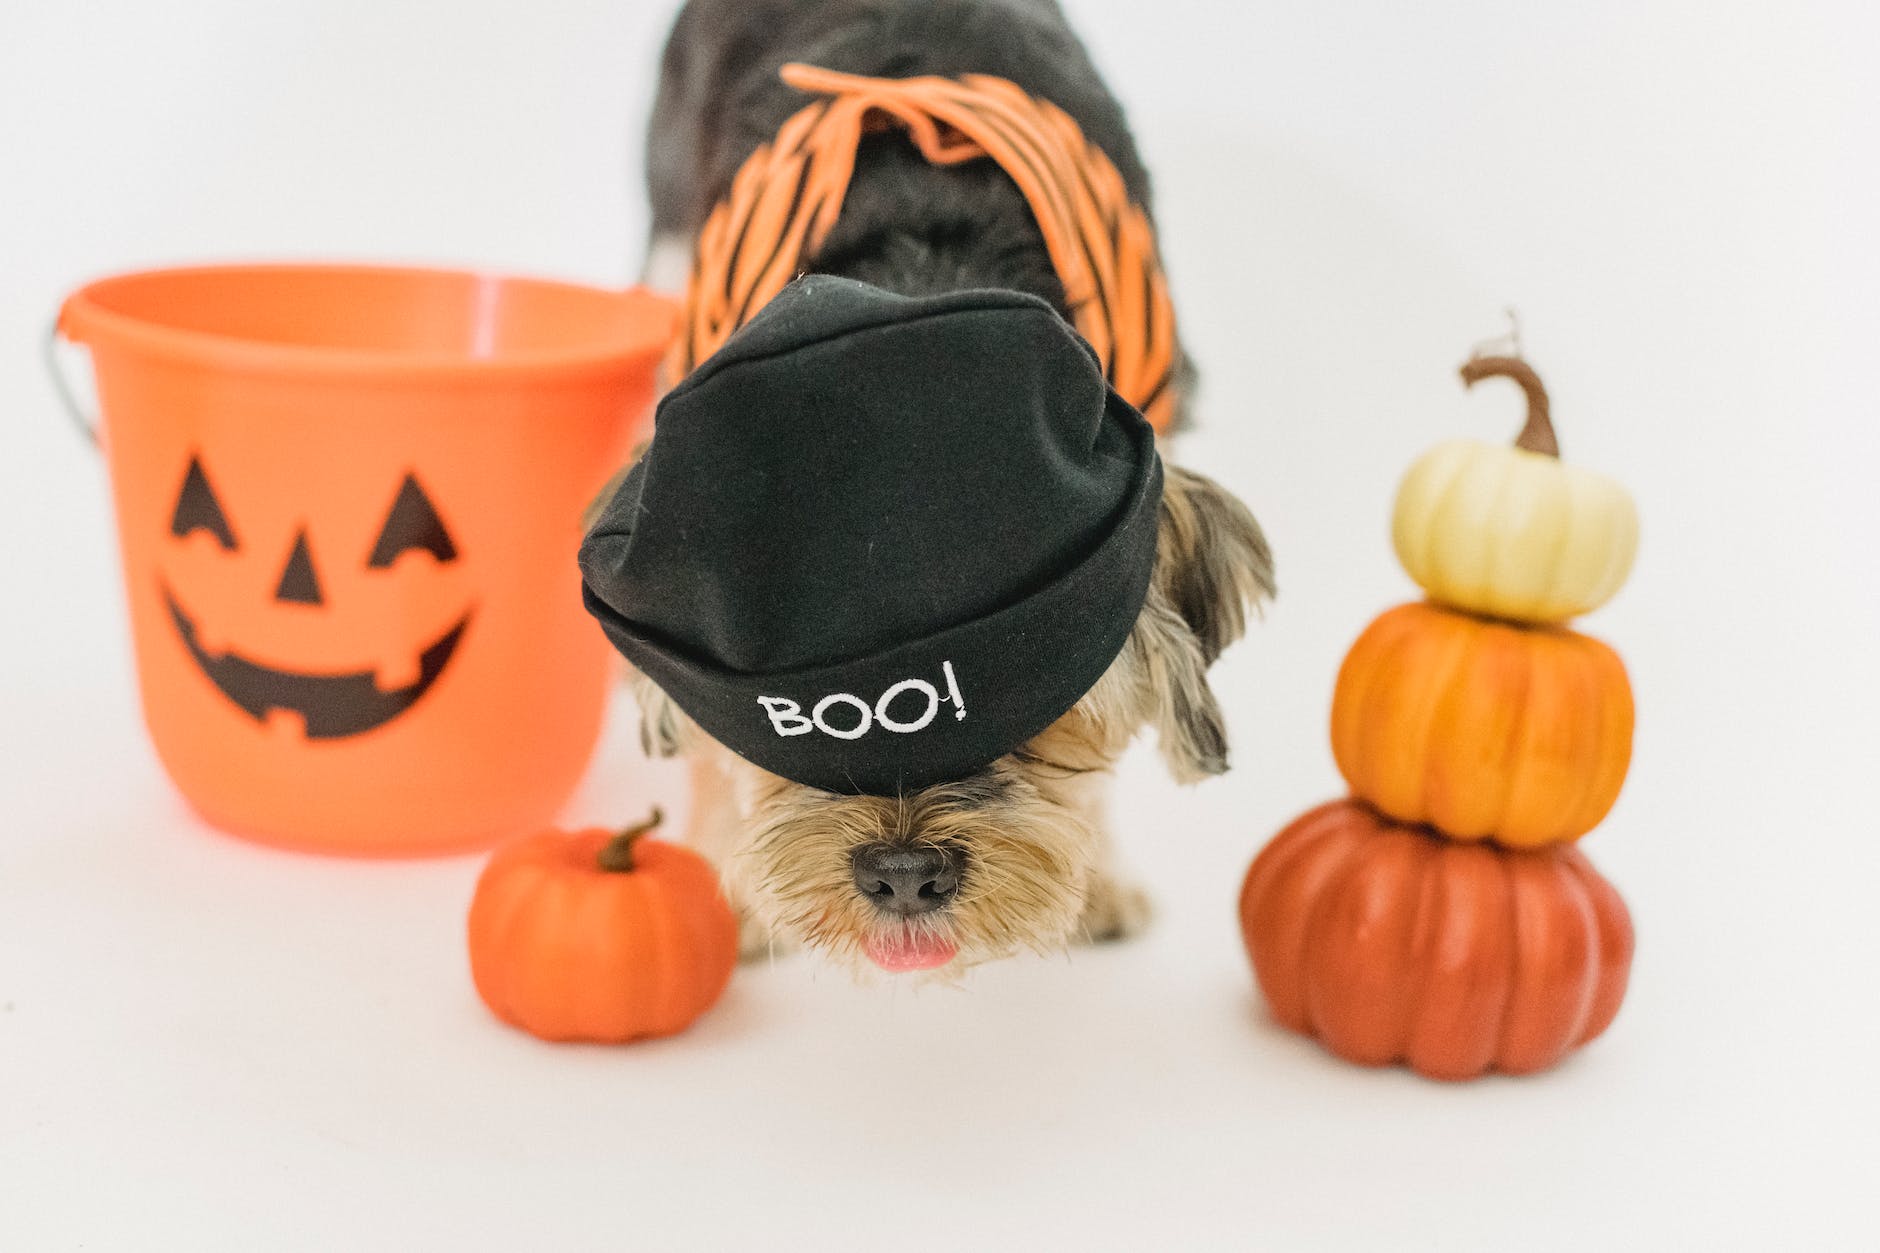 a dog wearing a hat and a pumpkin